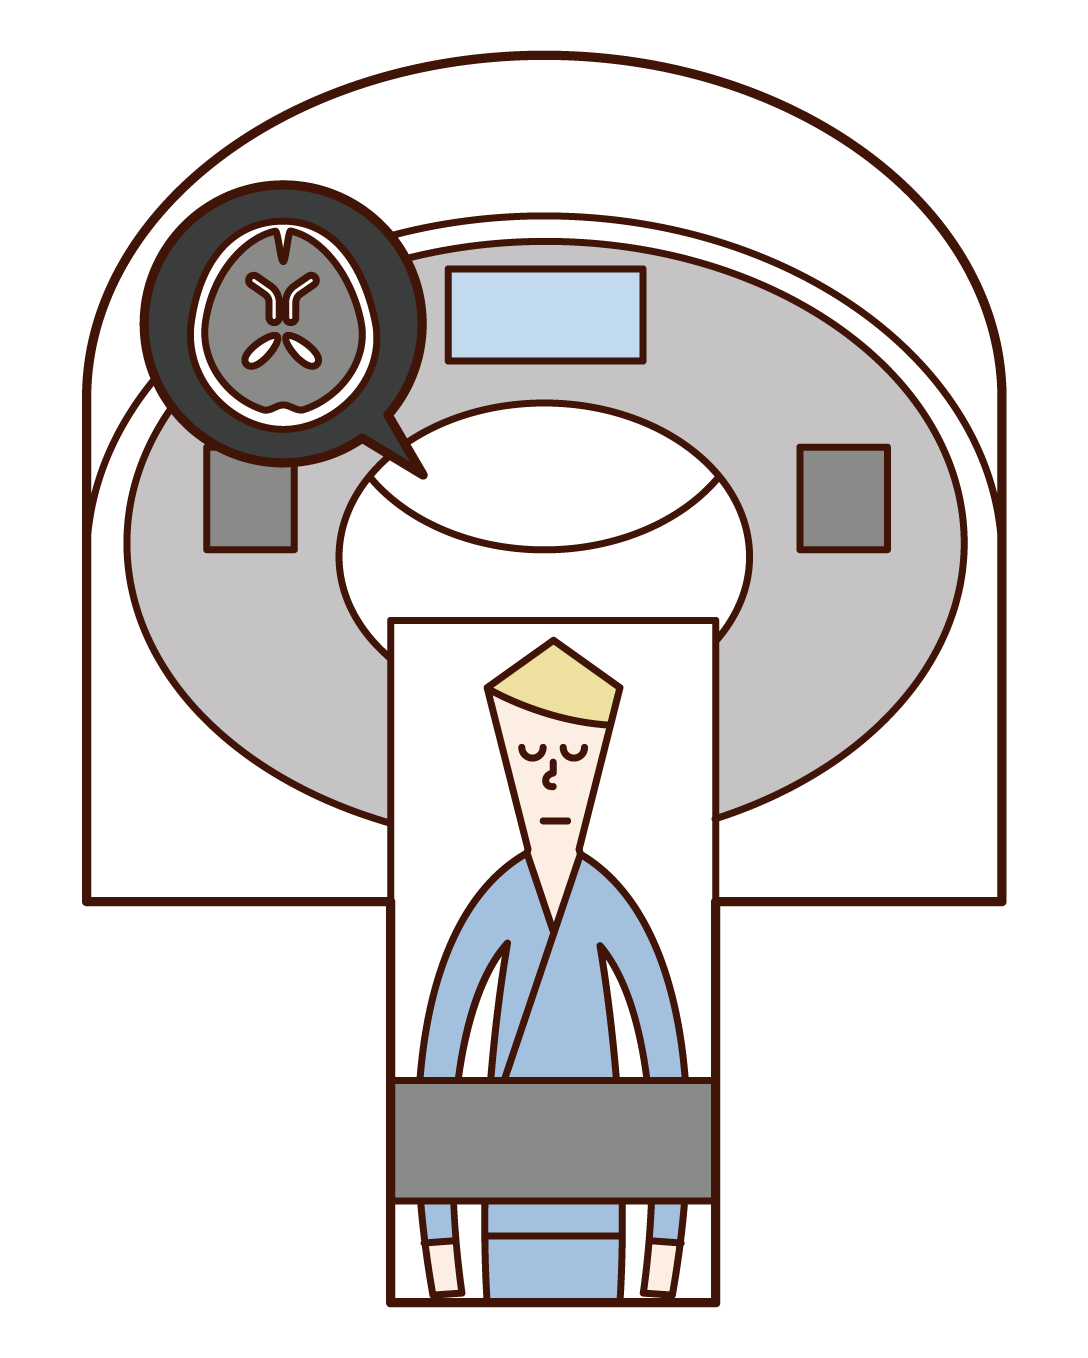 MRI 및 CT 검사를 받은 사람(남성)의 그림입니다